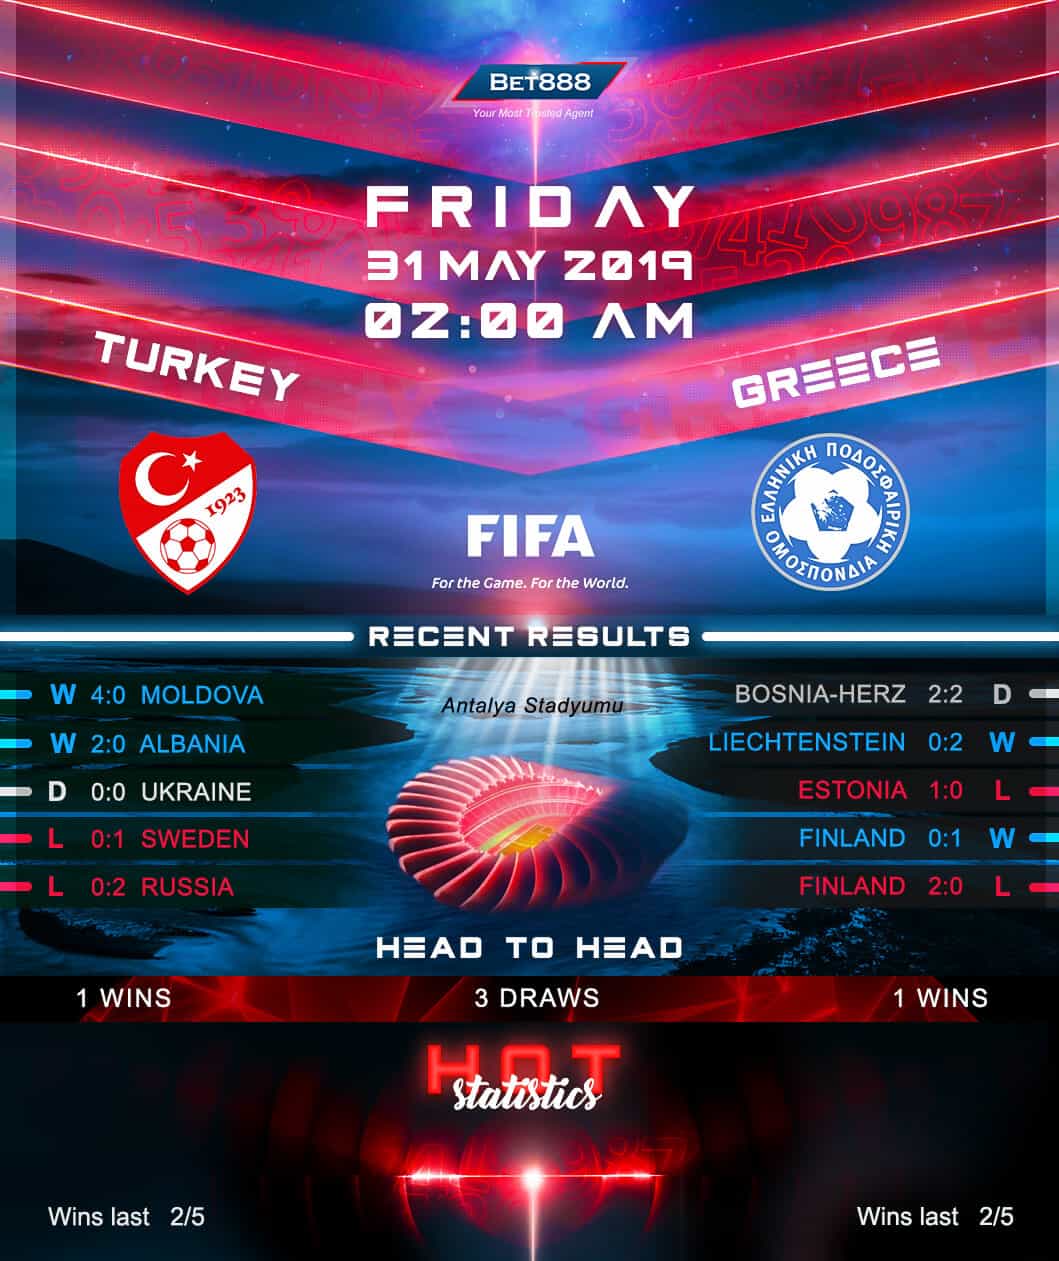 Turkey vs Greece﻿ 31/05/19